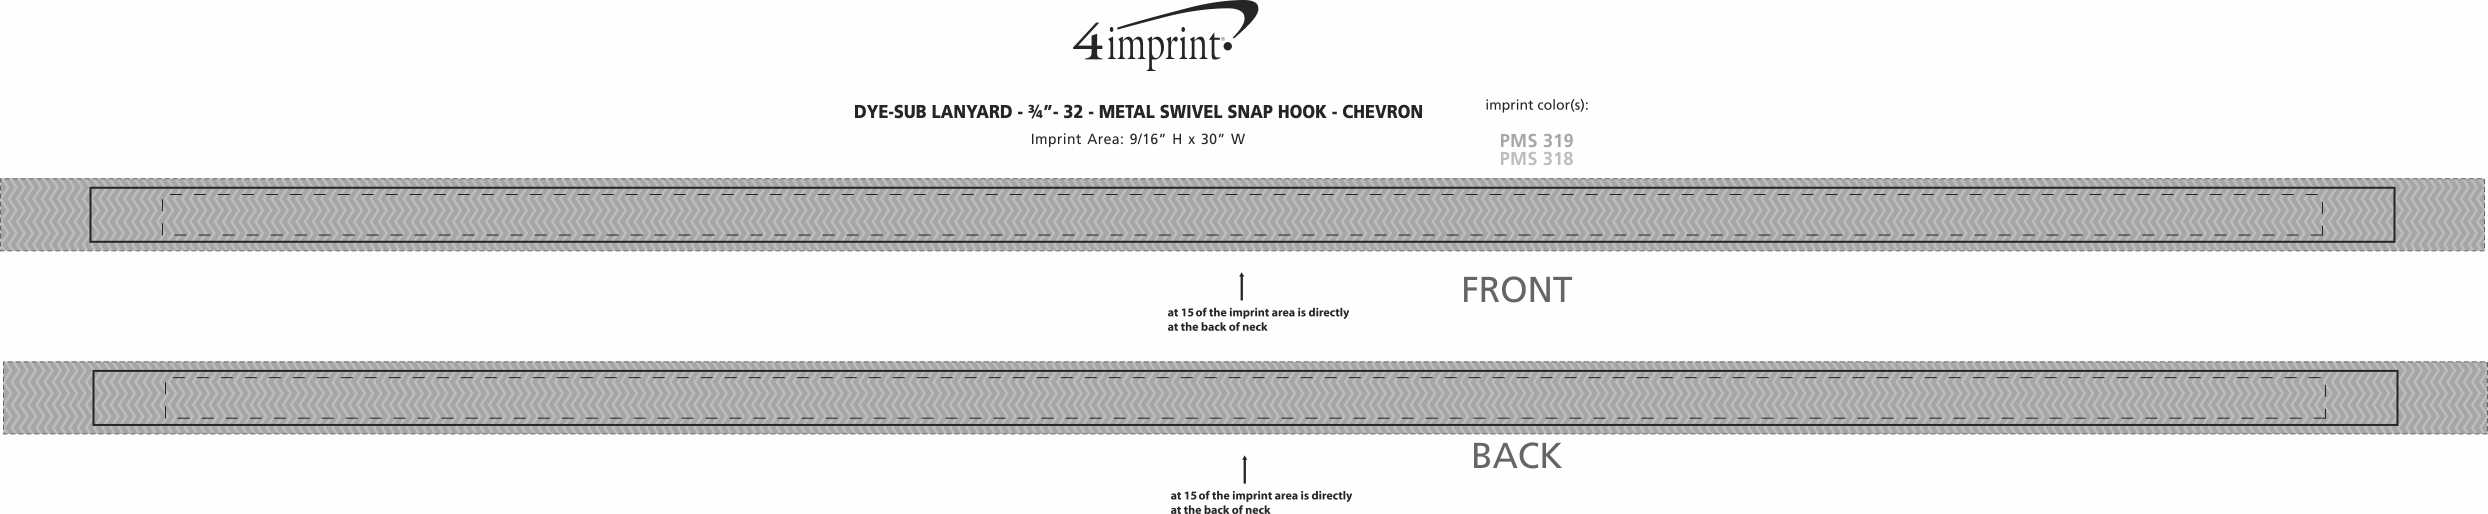 Imprint Area of Dye-Sub Lanyard - 3/4" - 32" - Metal Swivel Snap Hook - Chevron - 24 hr